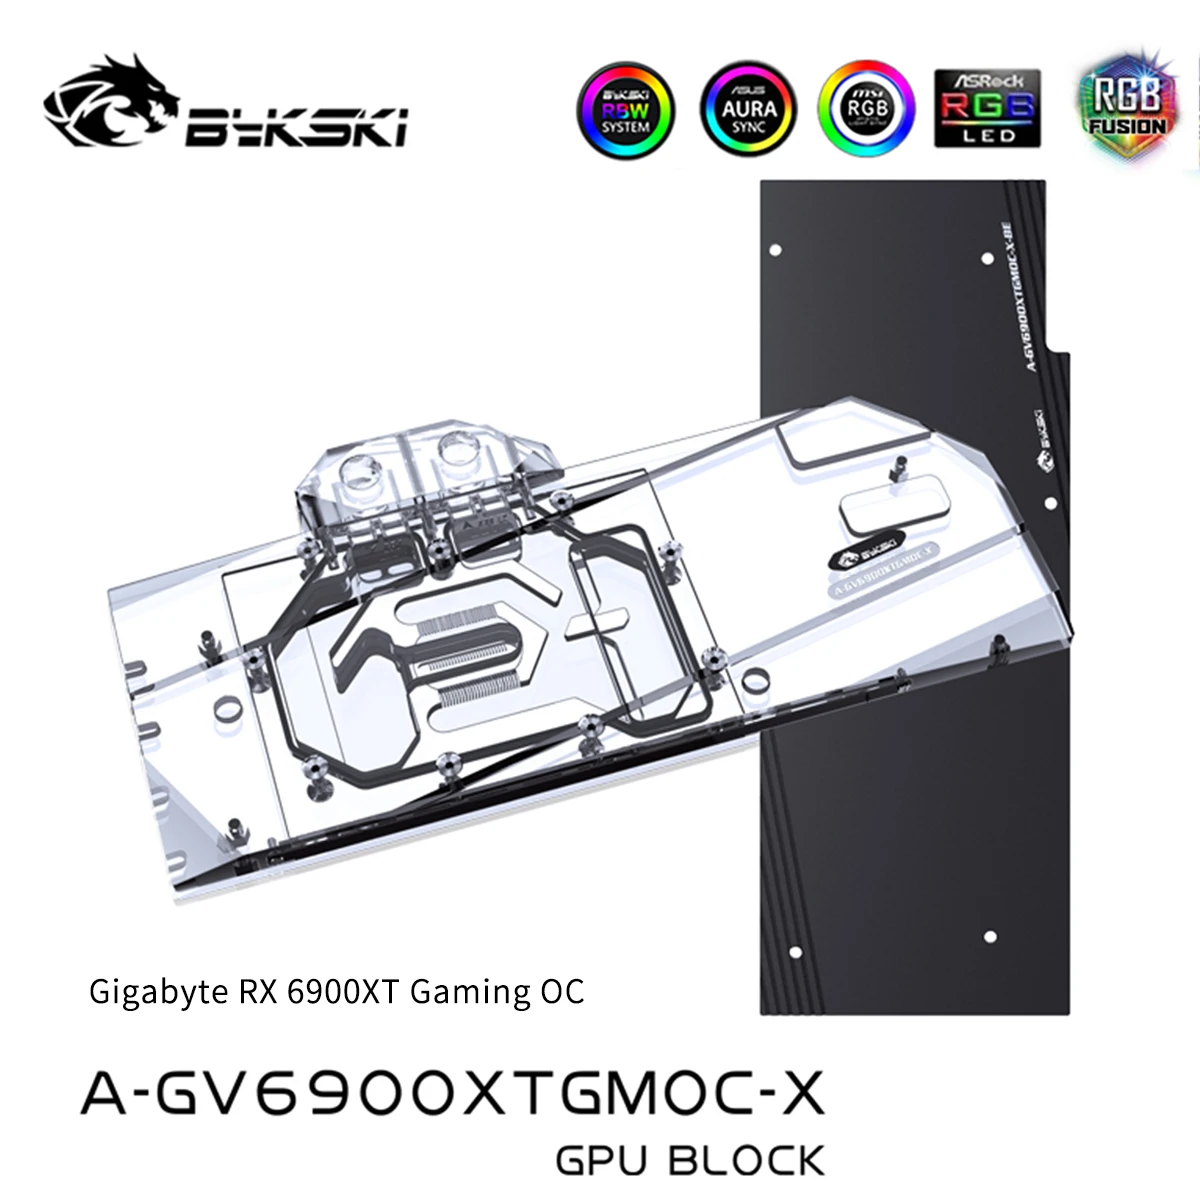 

Bykski GPU Water Block + Backplate For GIGABYTE RX 6900XT Gaming OC VGA Liquid Cooler, 5V/12V RGB SYNC, A-GV6900XTGMOC-X